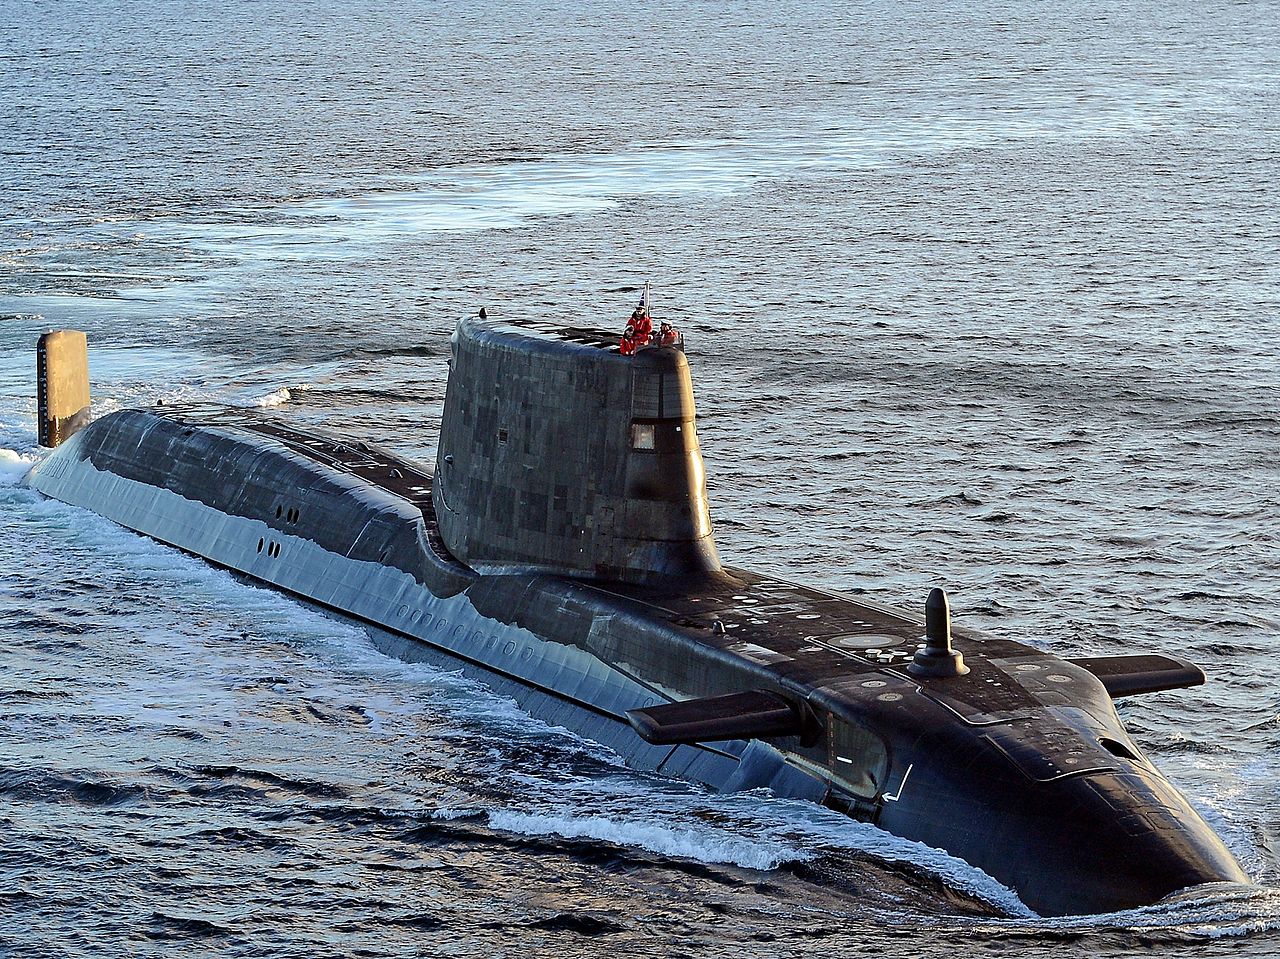 Astute class submarine HMS Ambush is pictured during sea trials near Scotland.